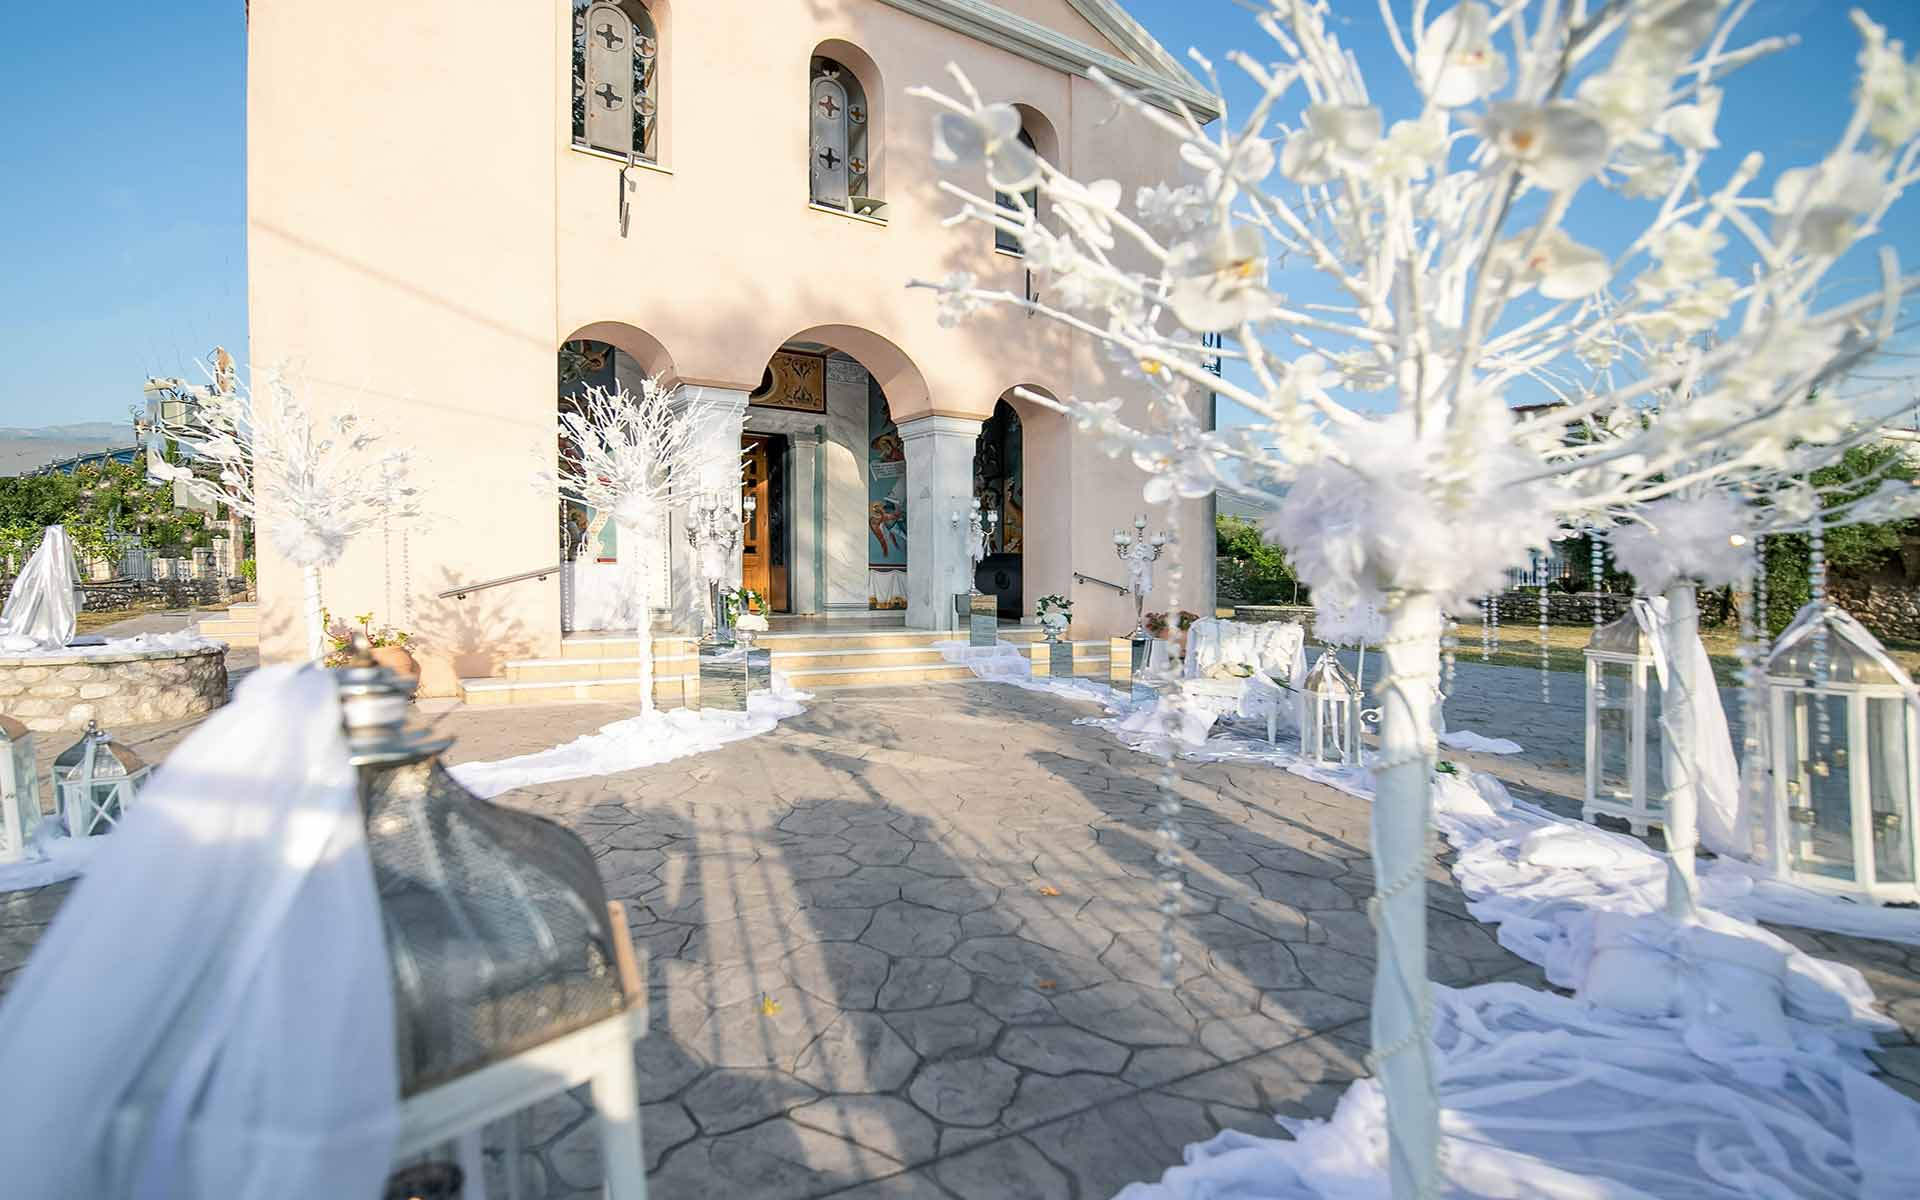 Wedding-Ceremony-Under-White-Trees-Decor-Ideas